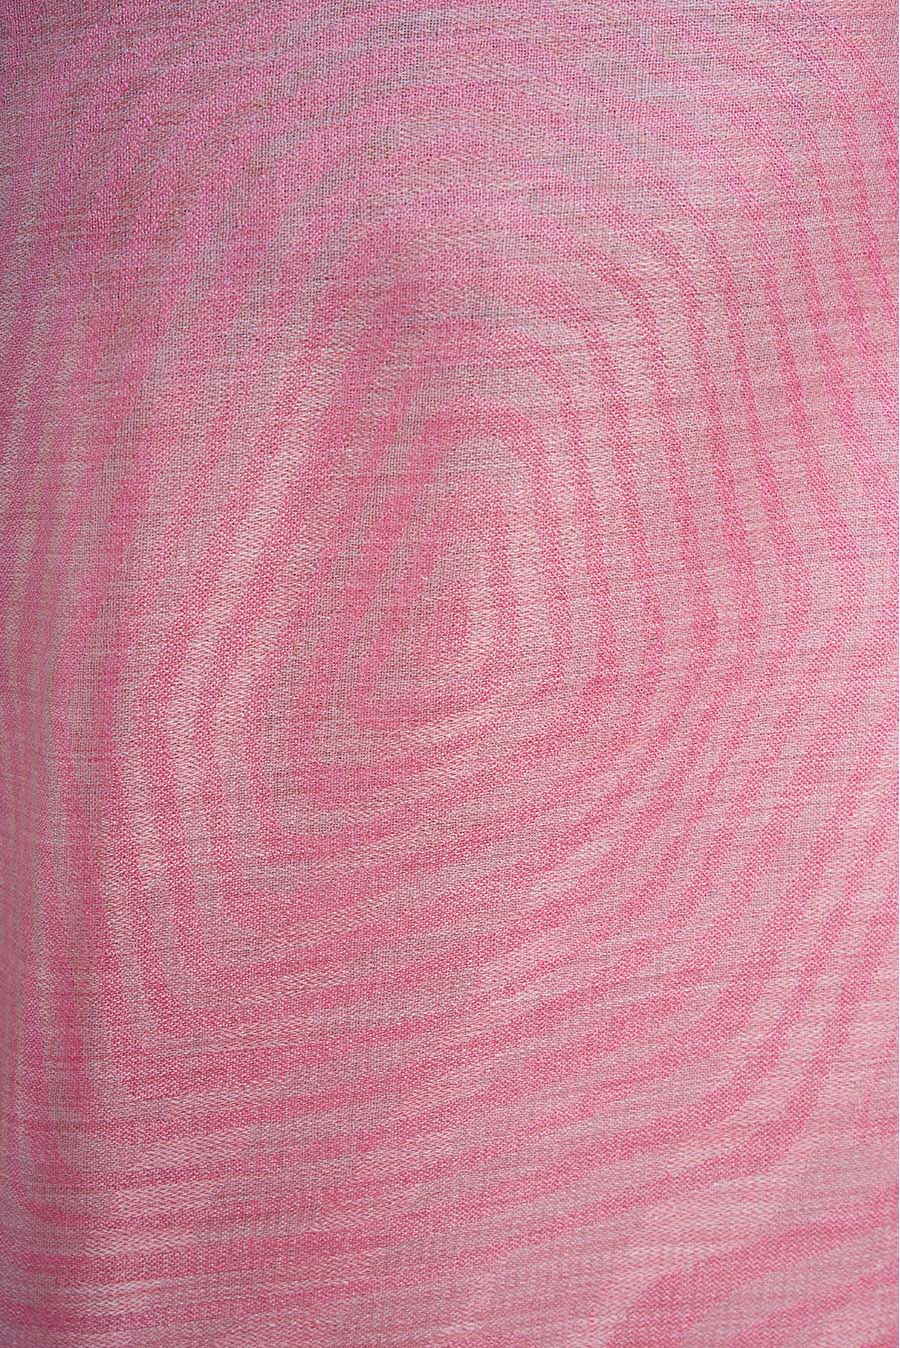 pashmina-estola-incalpaca-670-rosado